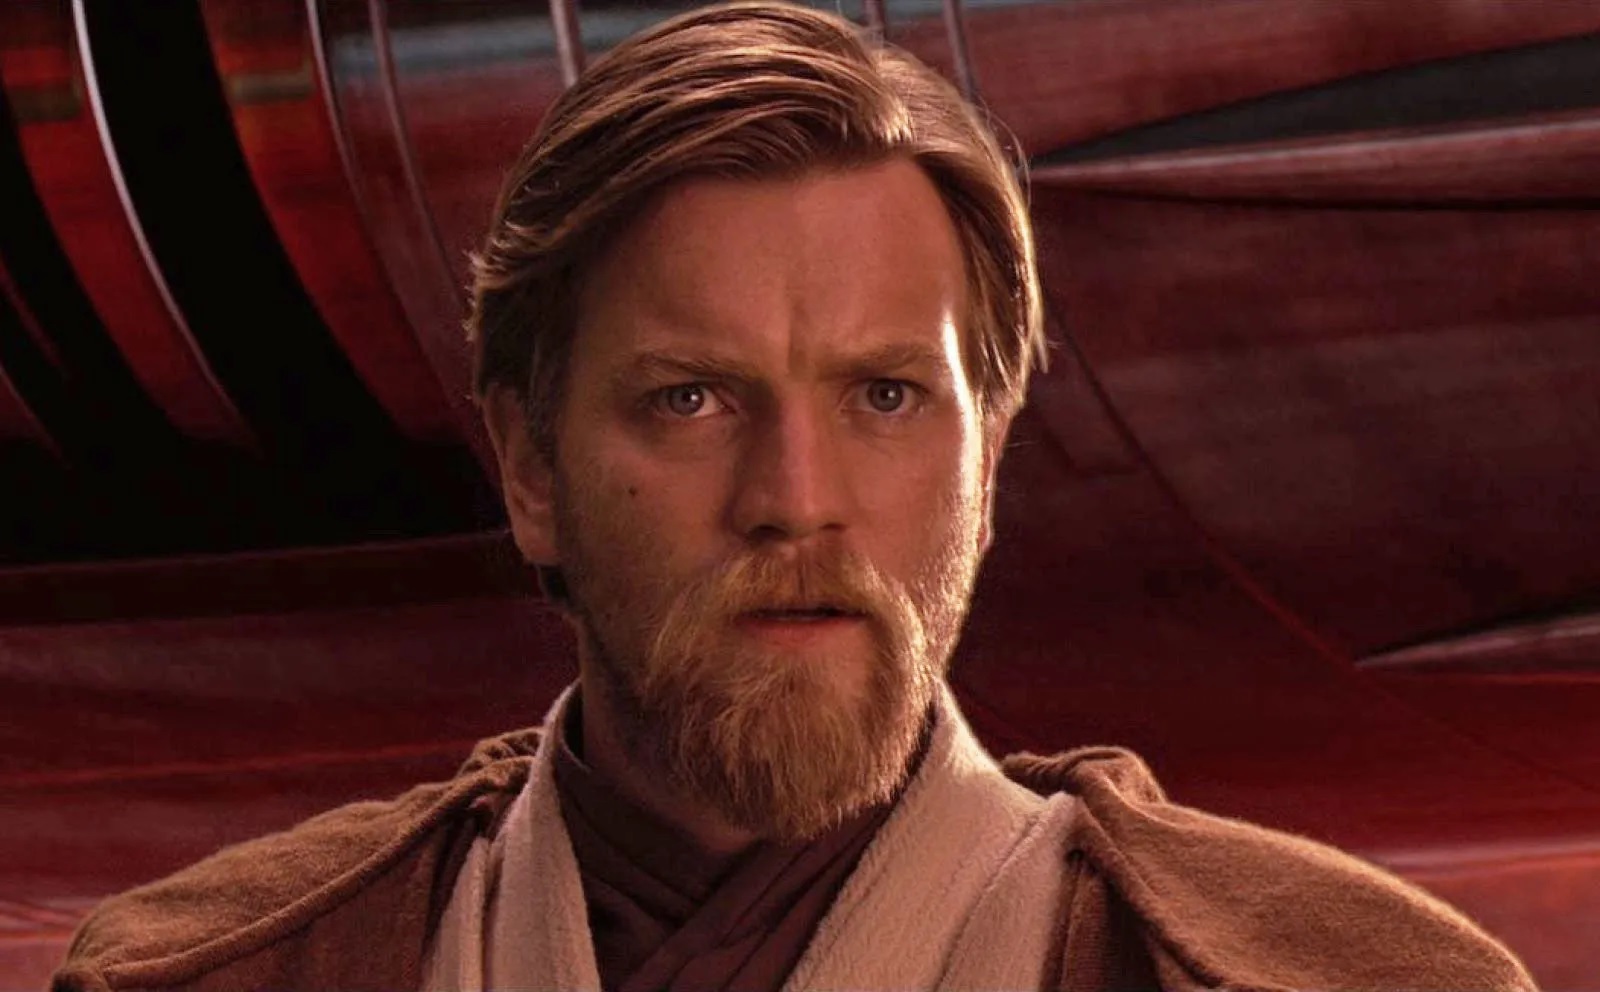 Ewan McGregor as Obi Wan